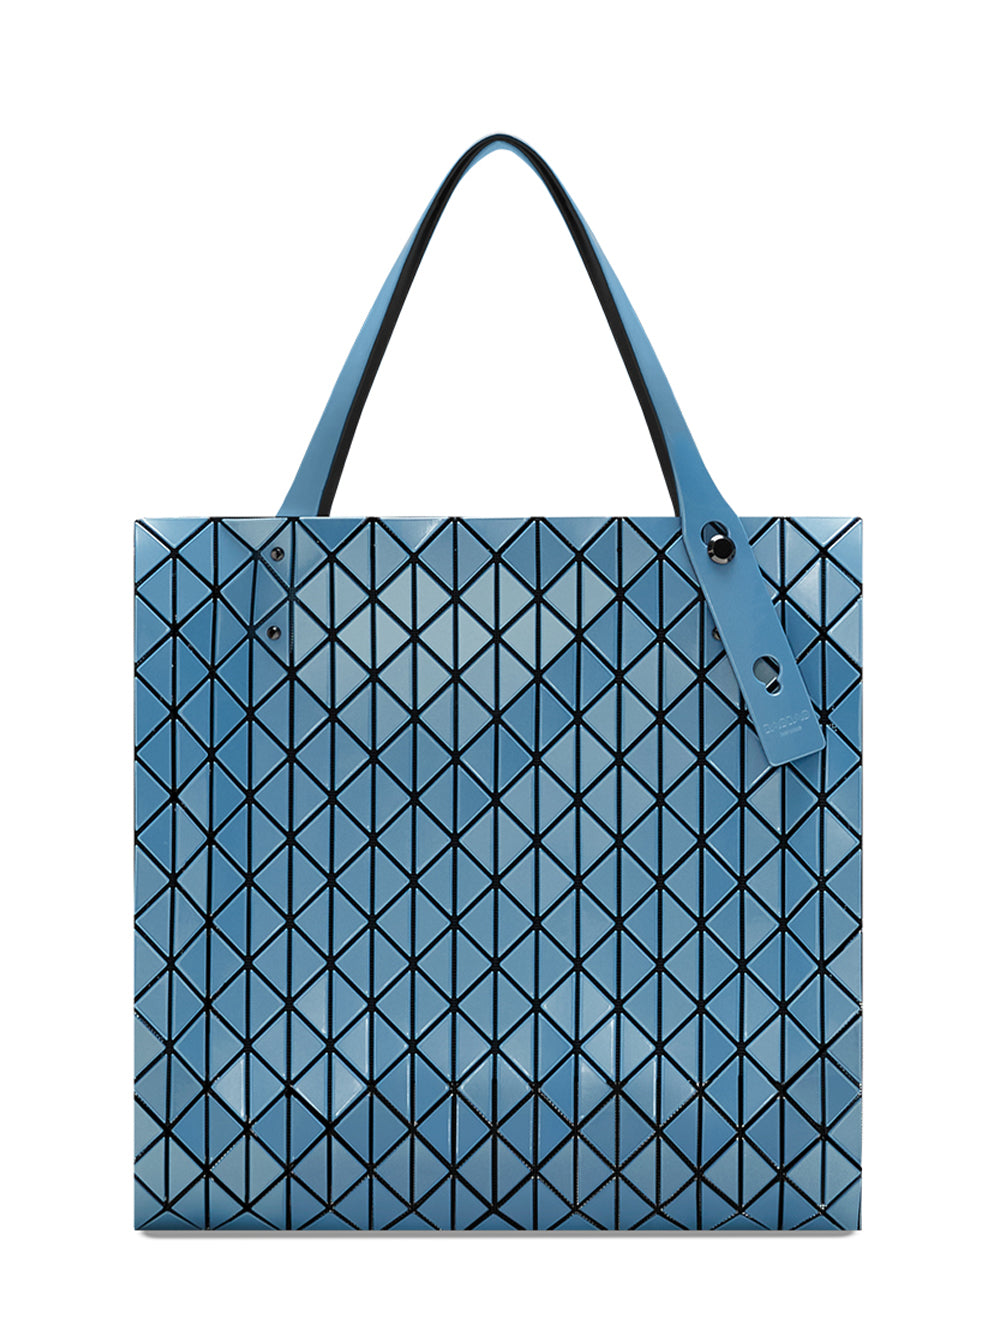 ROW METALLIC Handbag (Light Blue)